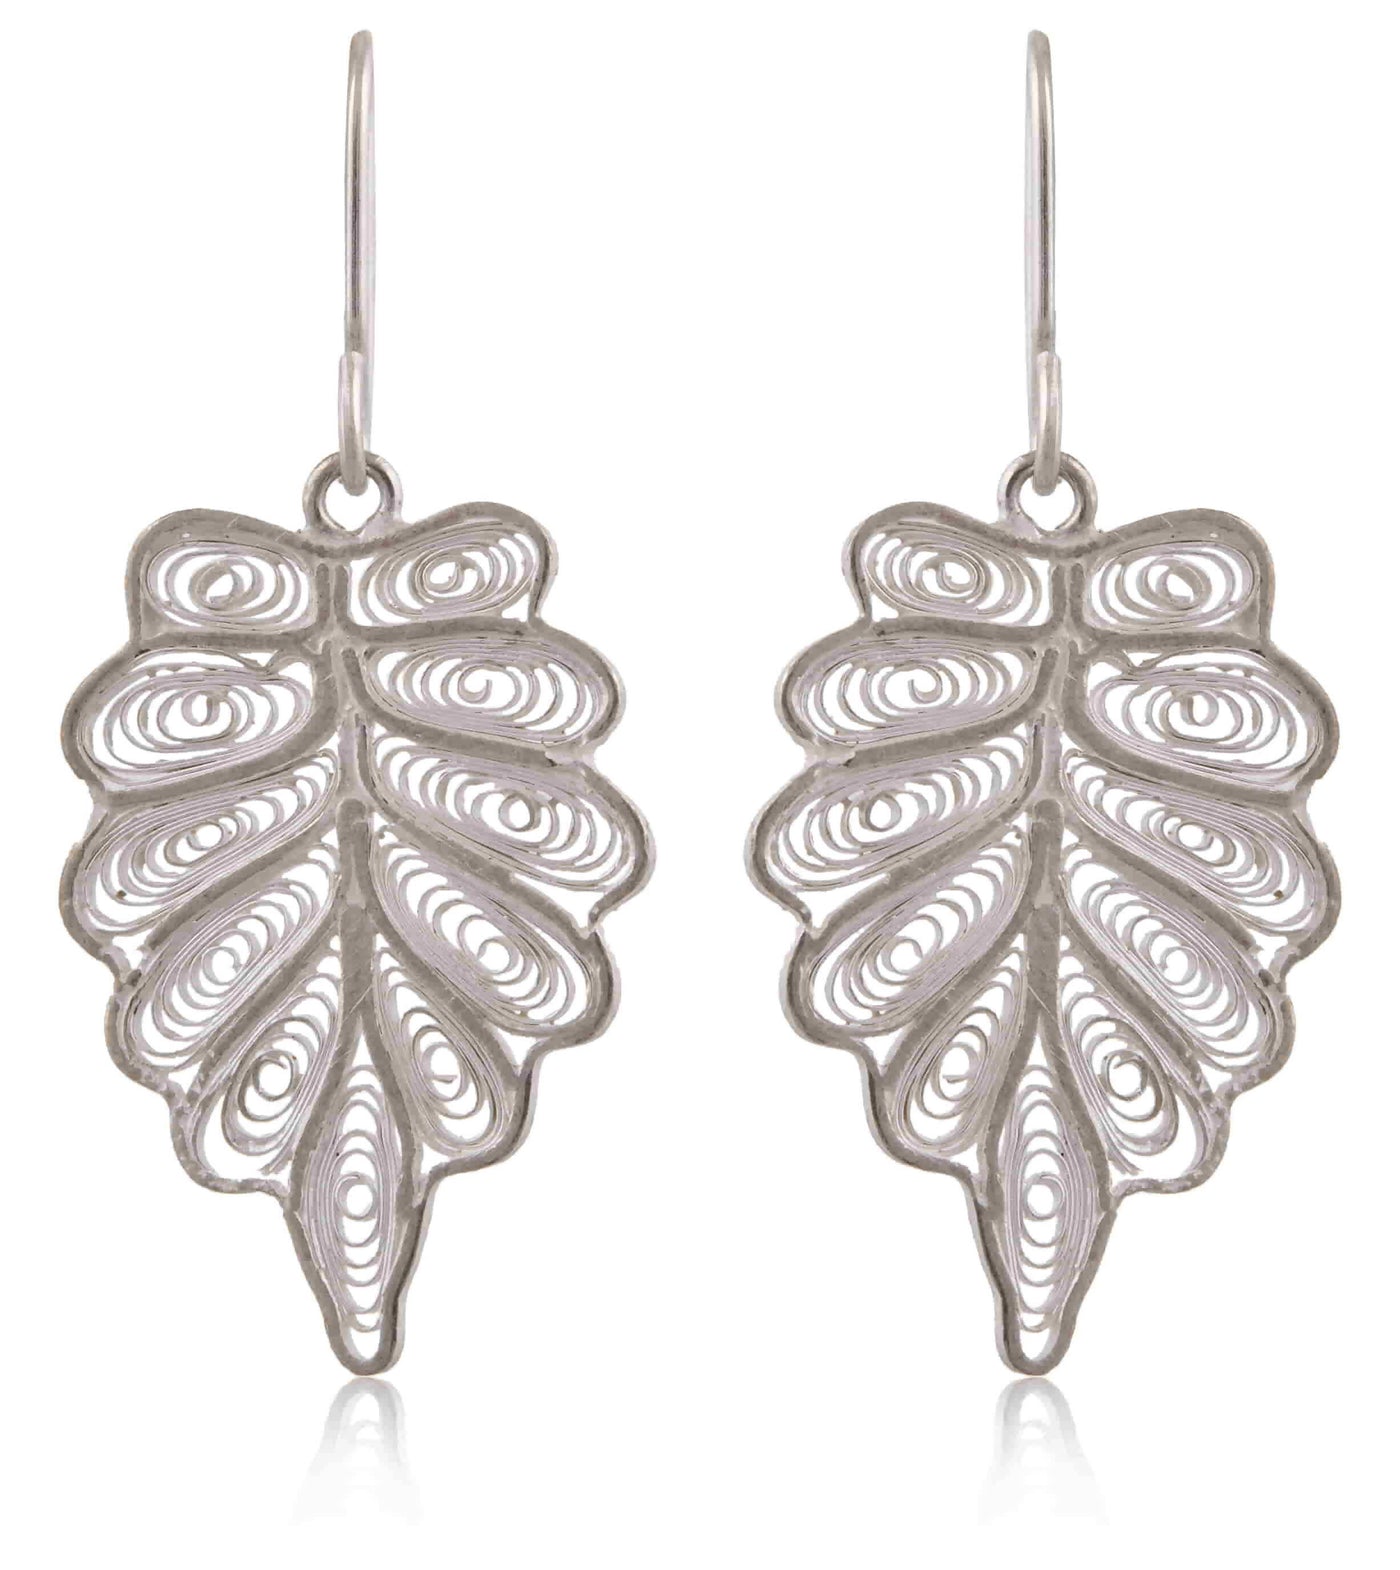 Leaf Imprint - Silver Filigree earrings SJ-989 - Fashion & Lifestyle - 1